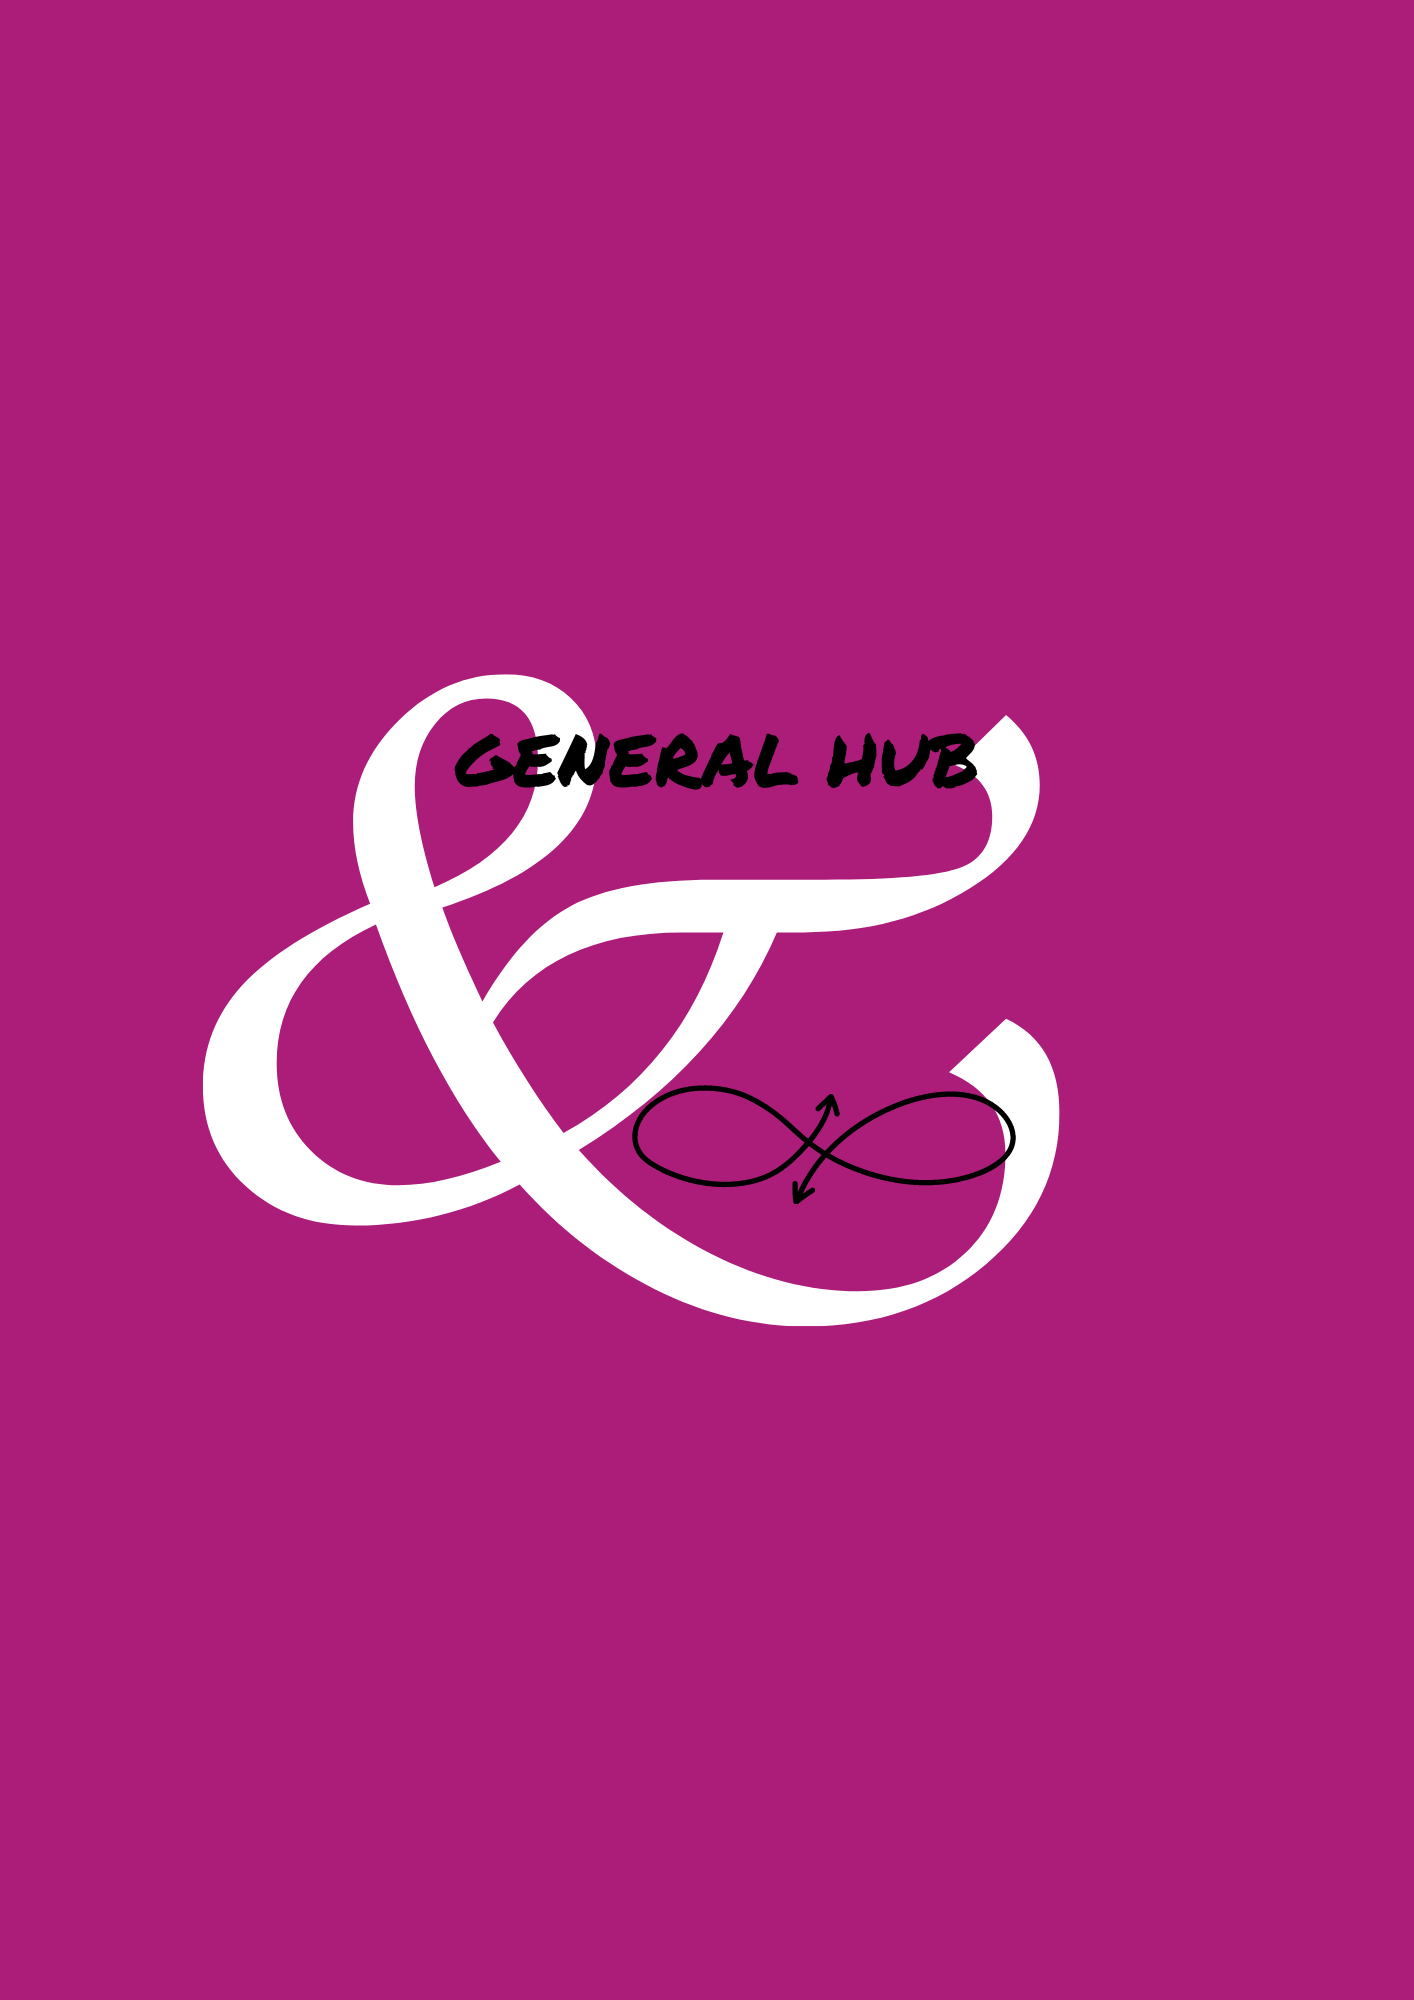 General Hub